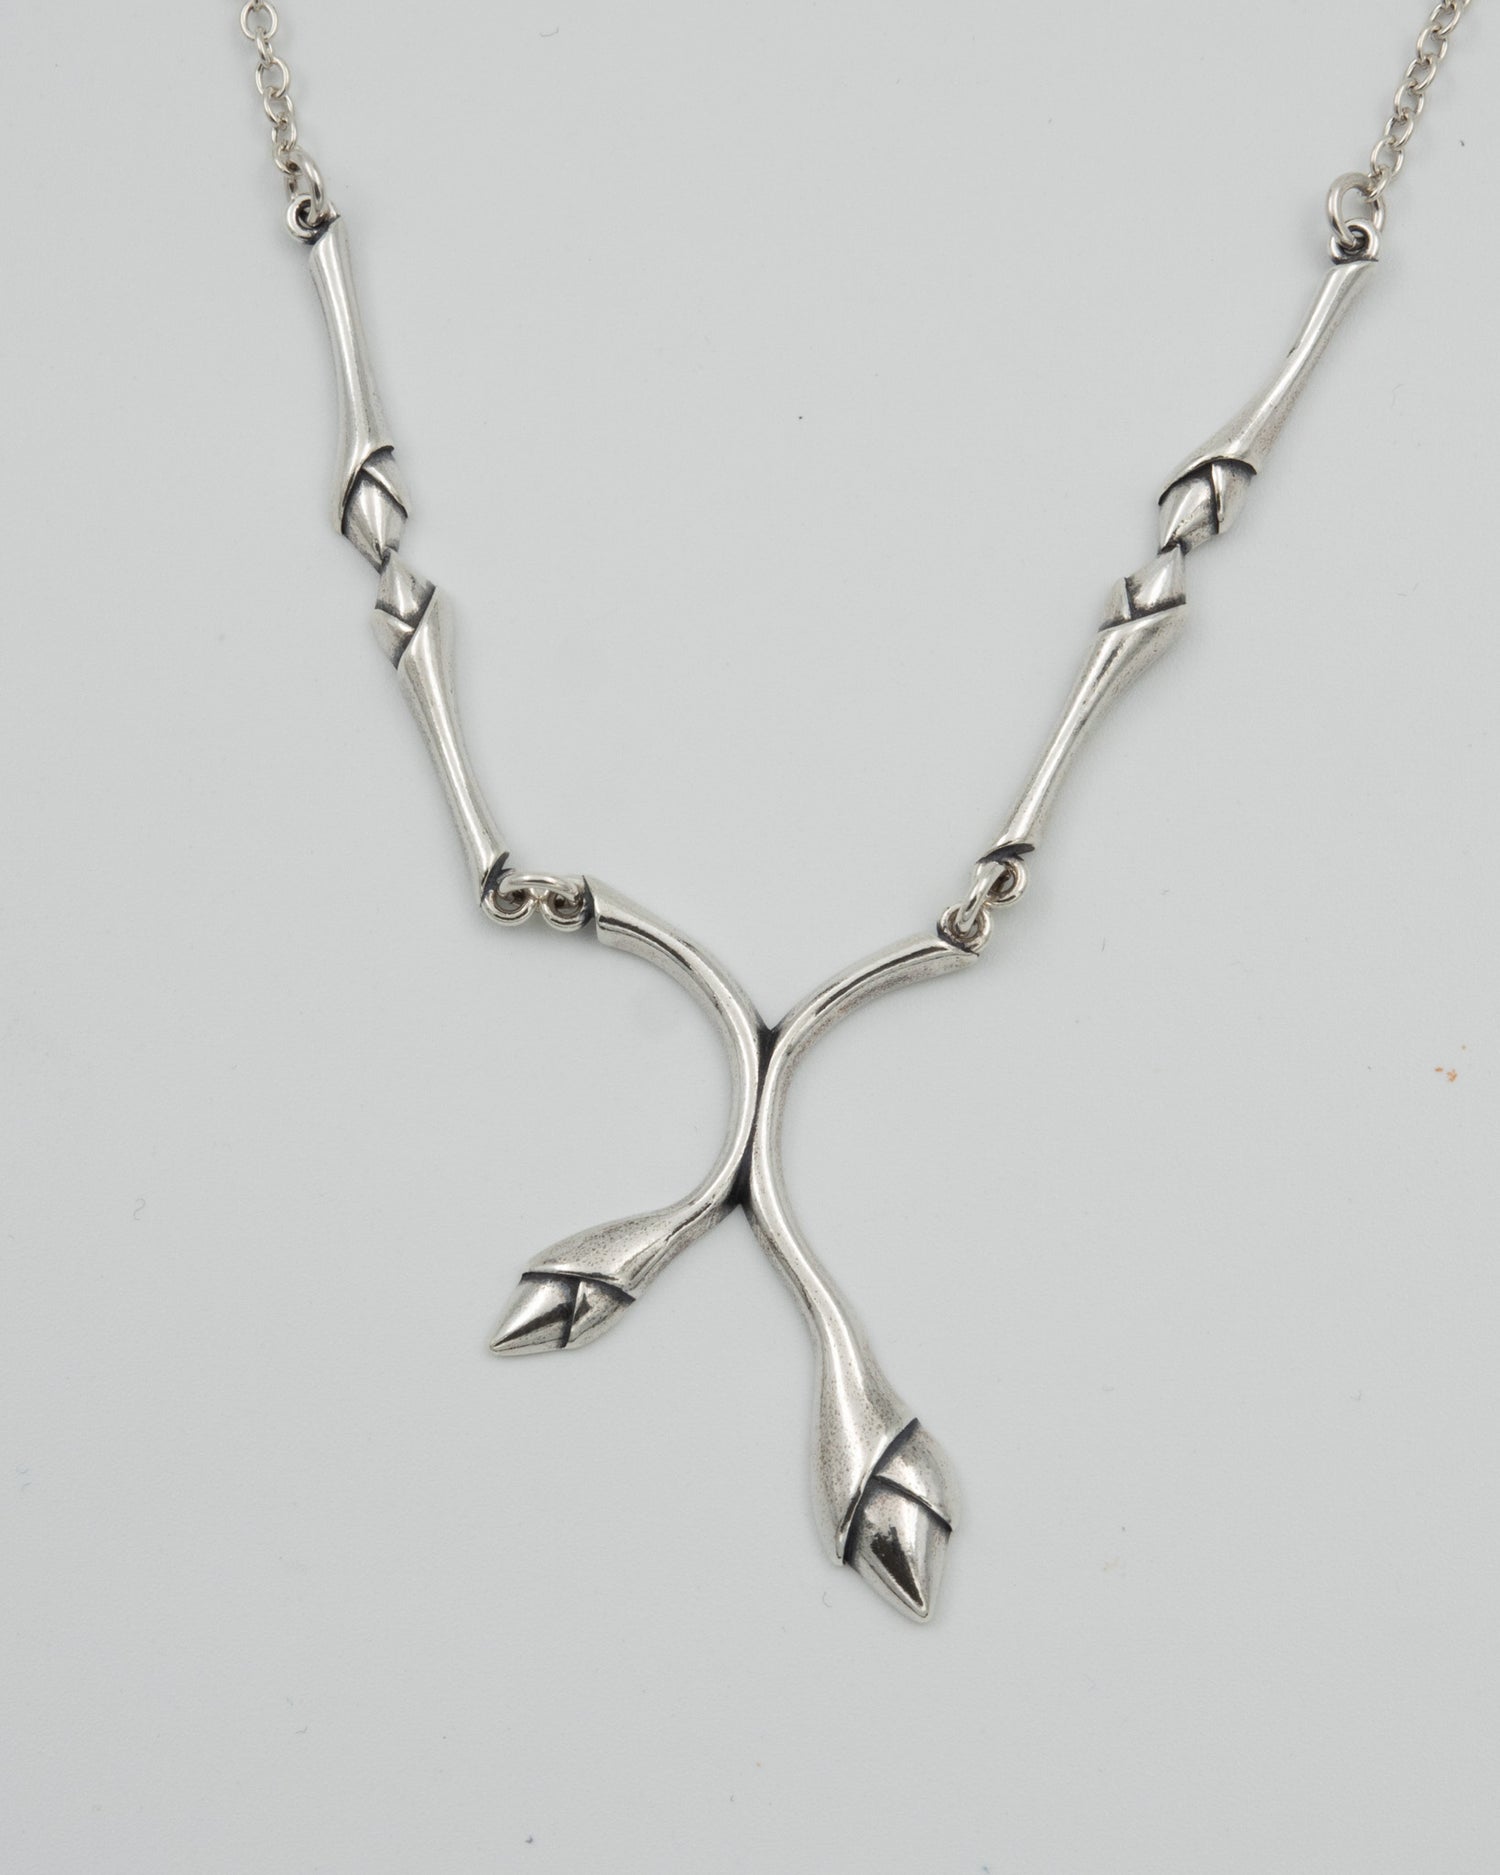 Kept Lumo necklace large 45 cm silver